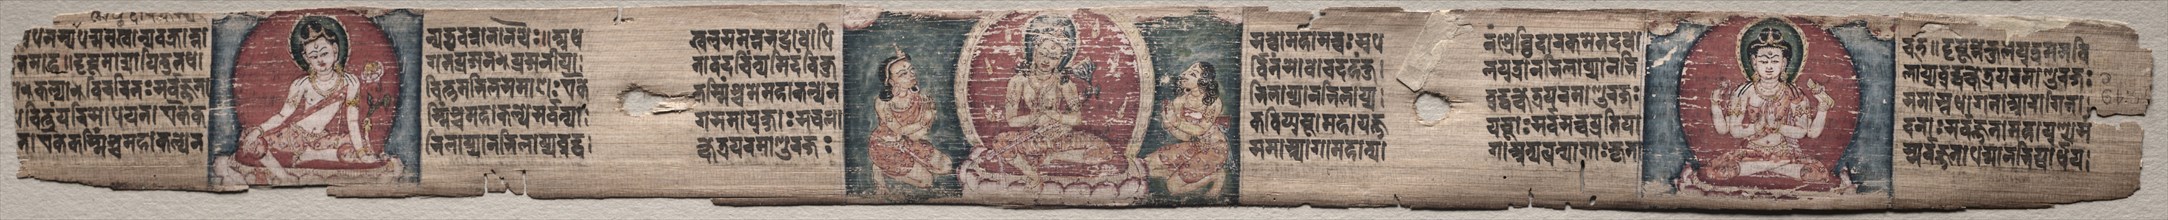 Leaf from Gandavyuha: Samantabhadra, Avalokiteshvara and Manjushri, from Chapter 55 (recto); Leaf